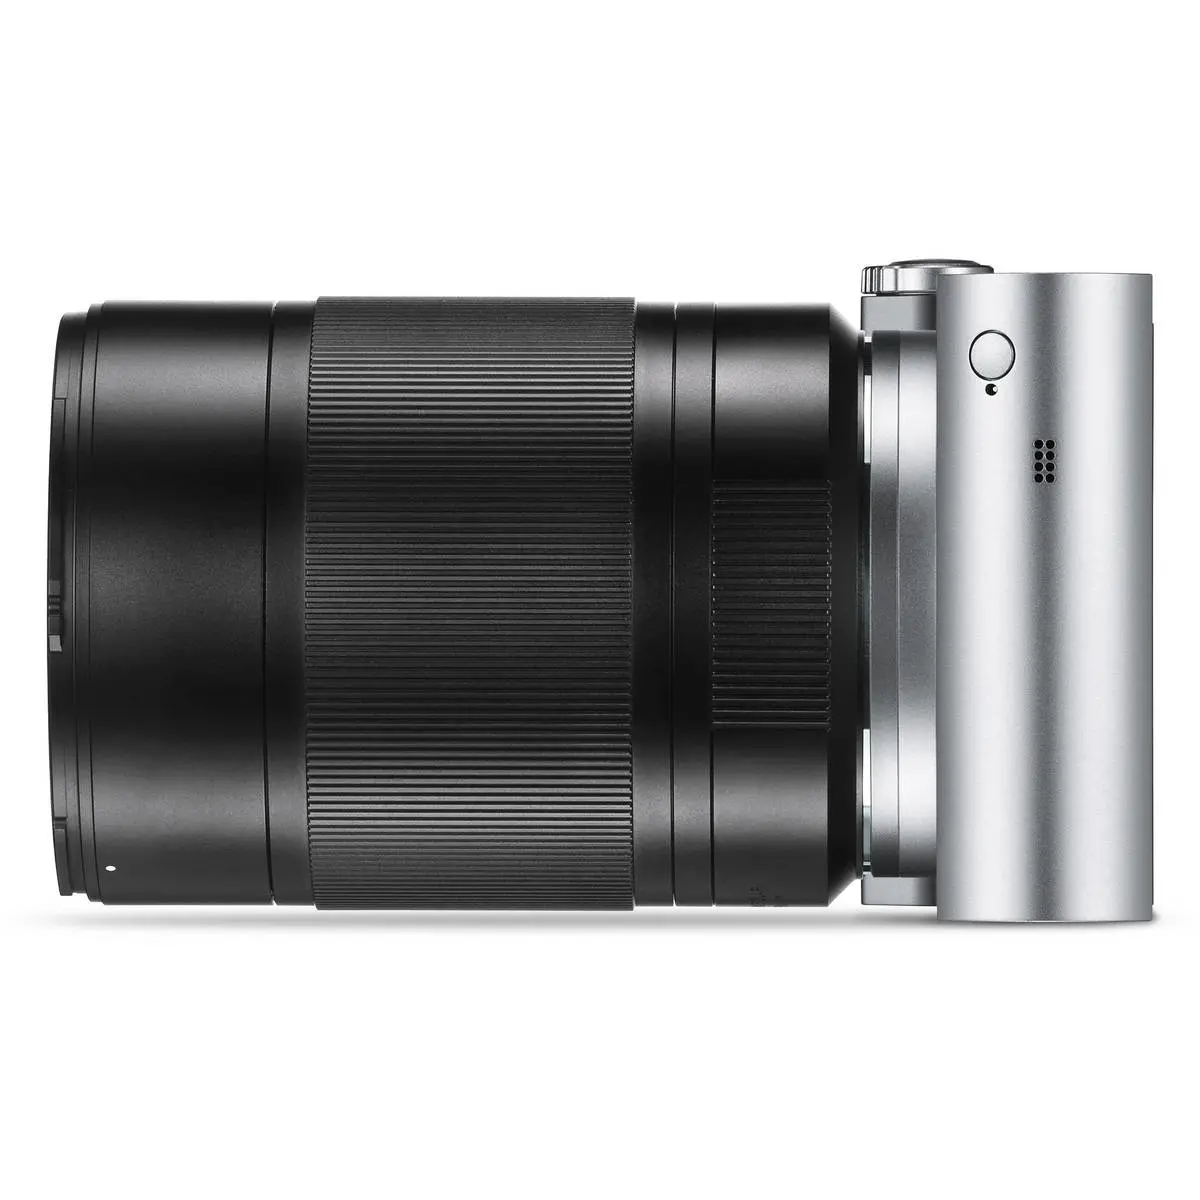 5. Leica APO-Macro-Elmarit-TL 60mm F2.8 ASPH (Black) Lens